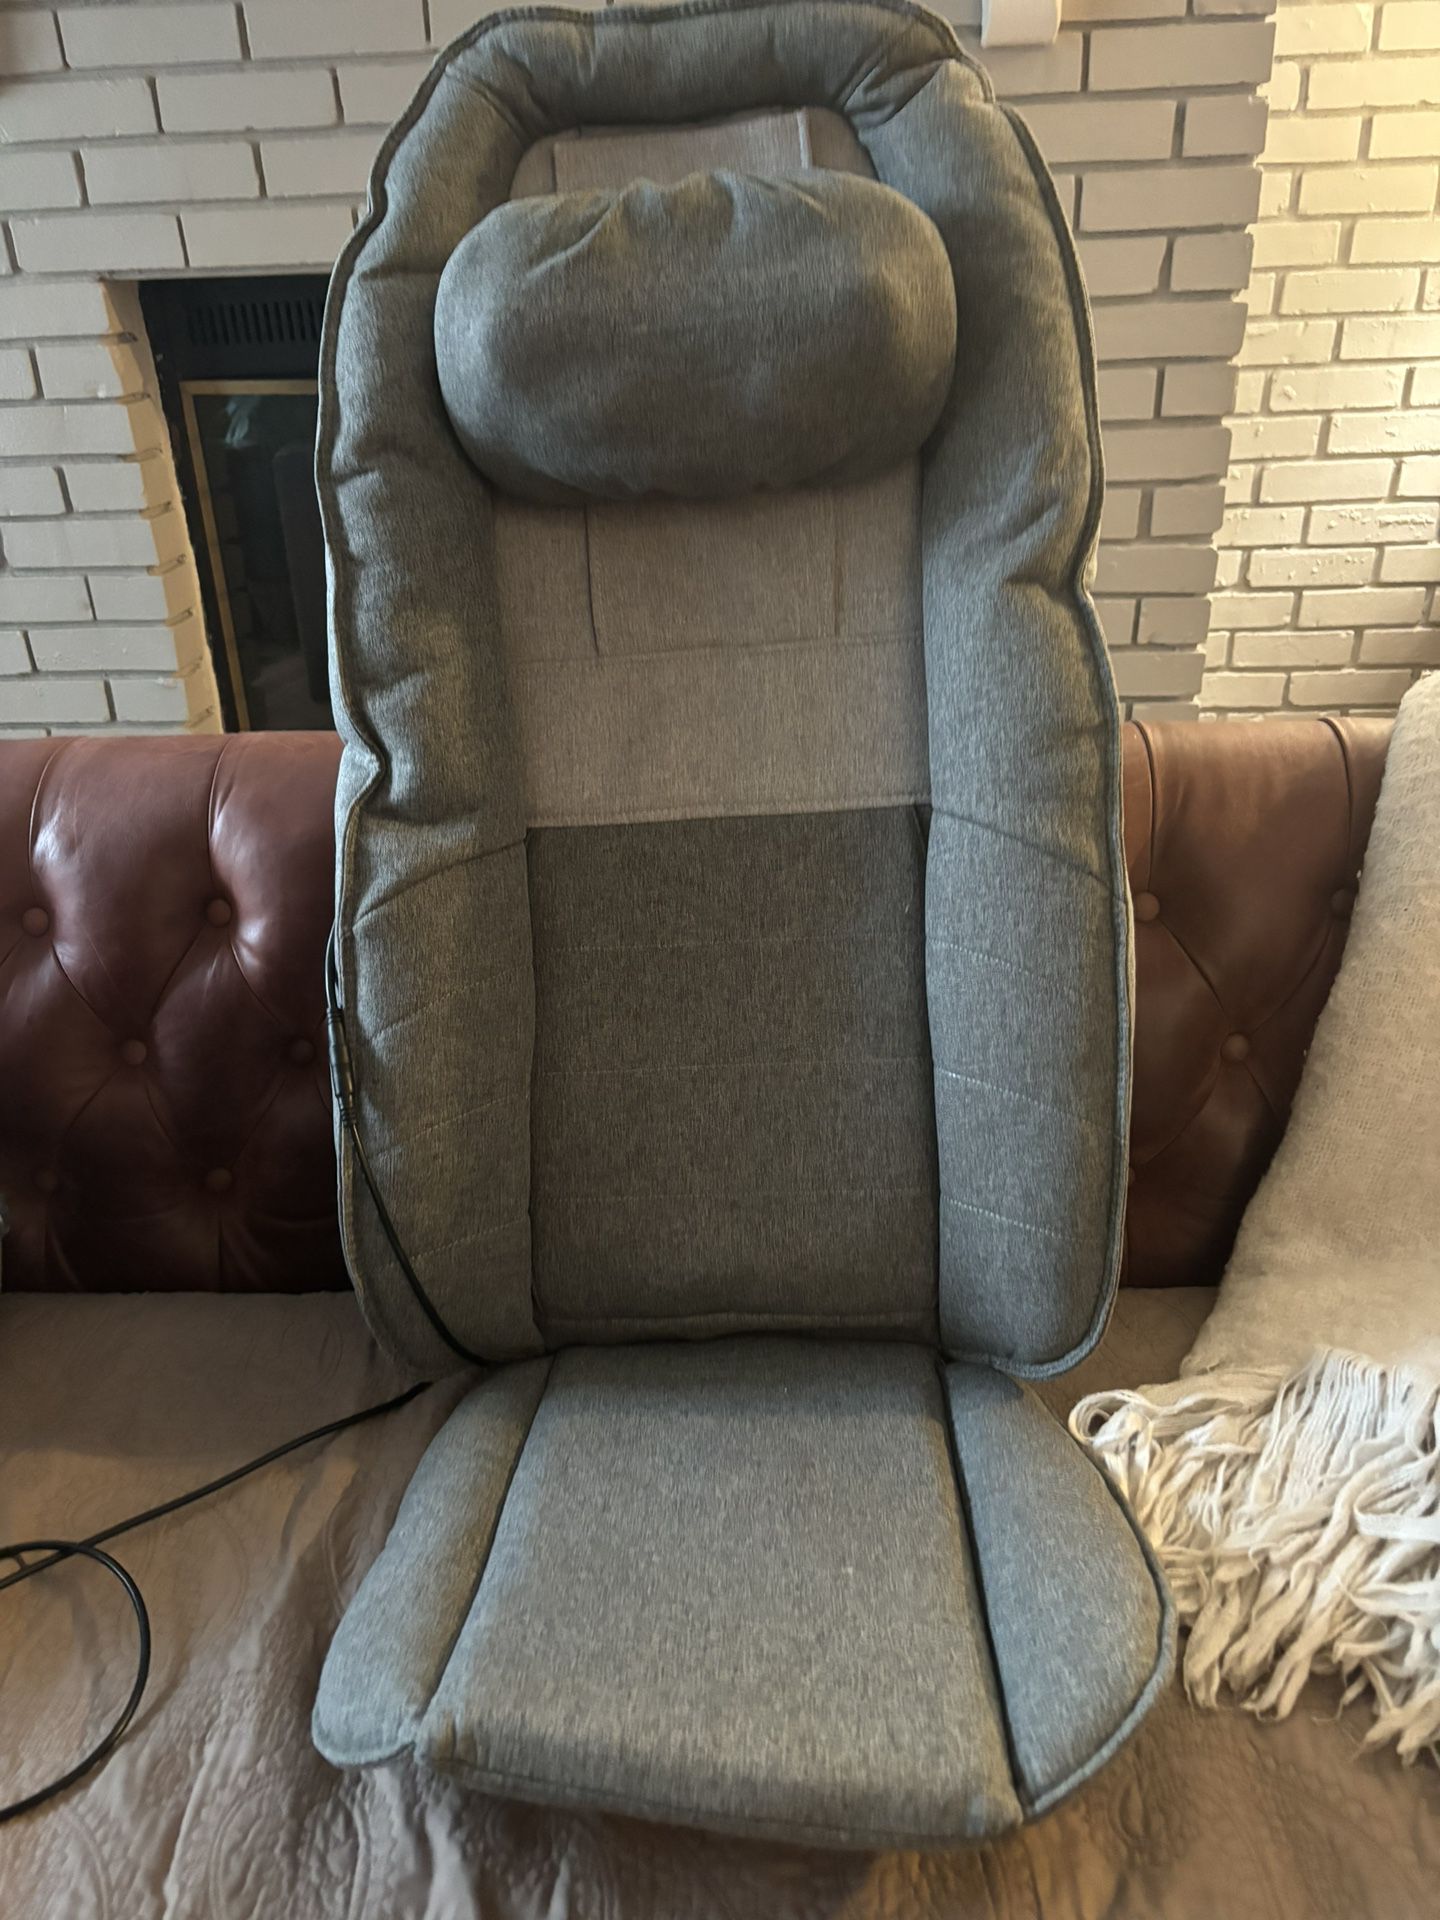 Homedics Massage Chair